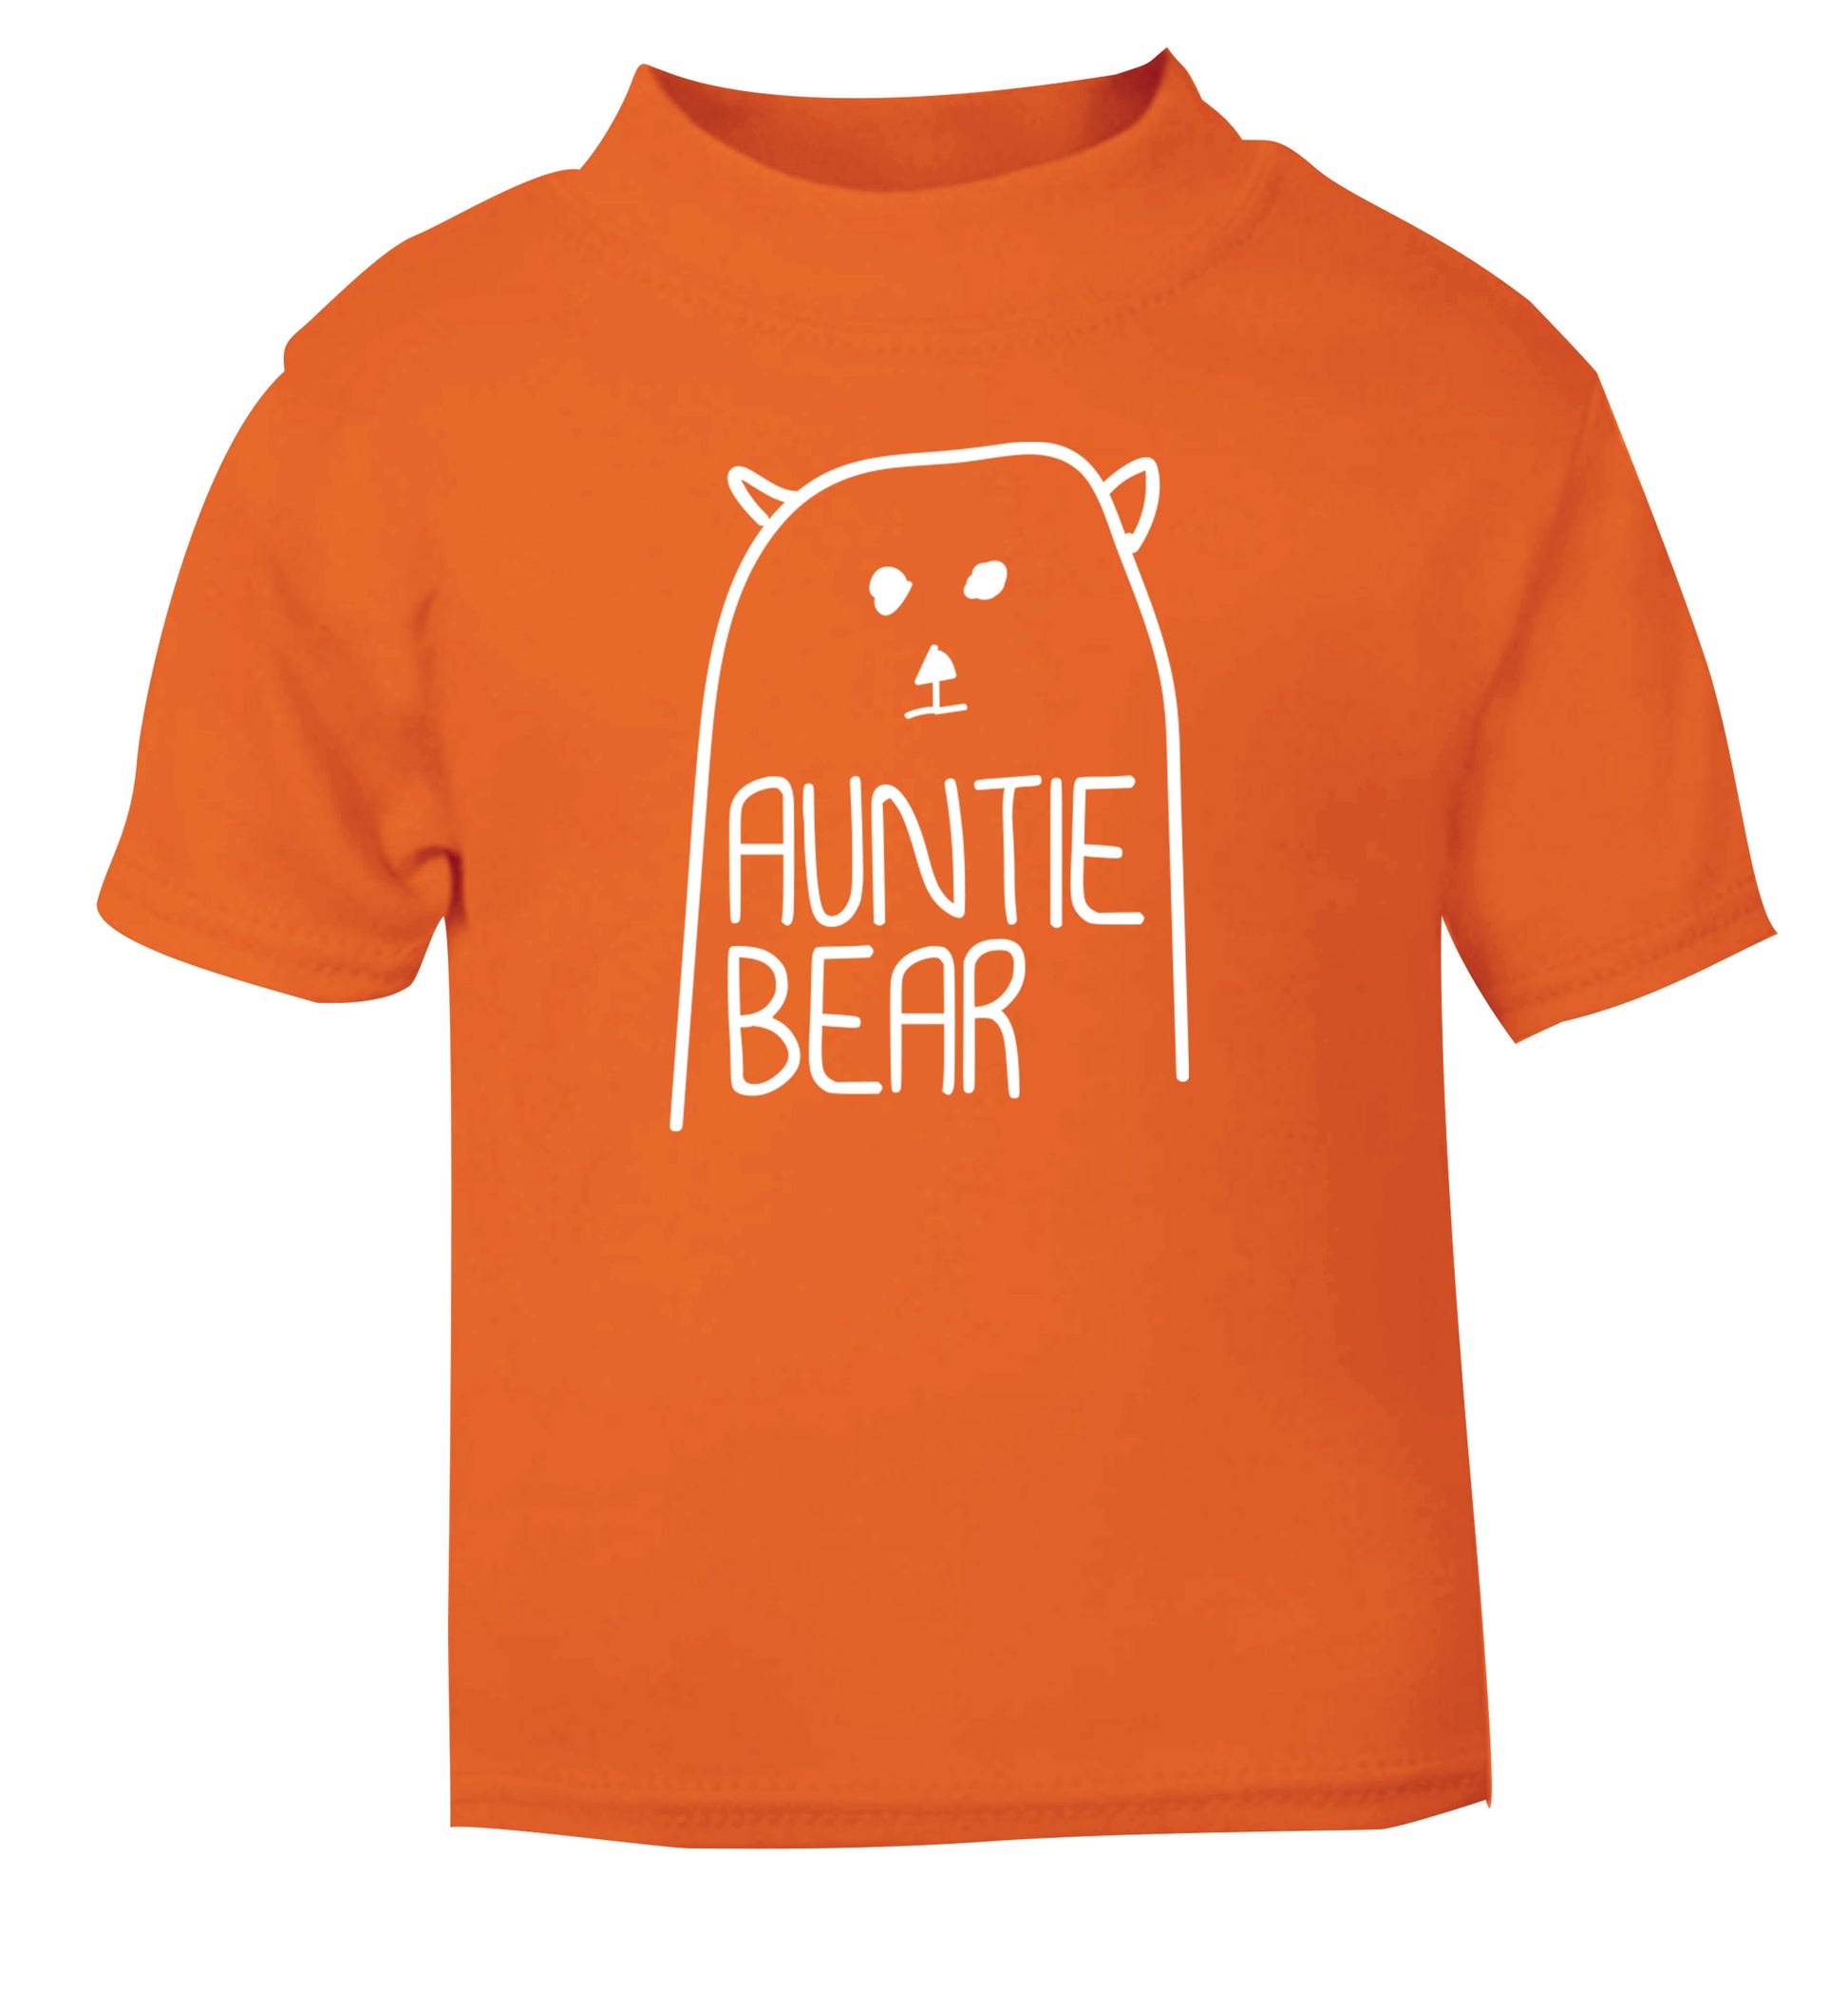 Auntie bear orange Baby Toddler Tshirt 2 Years